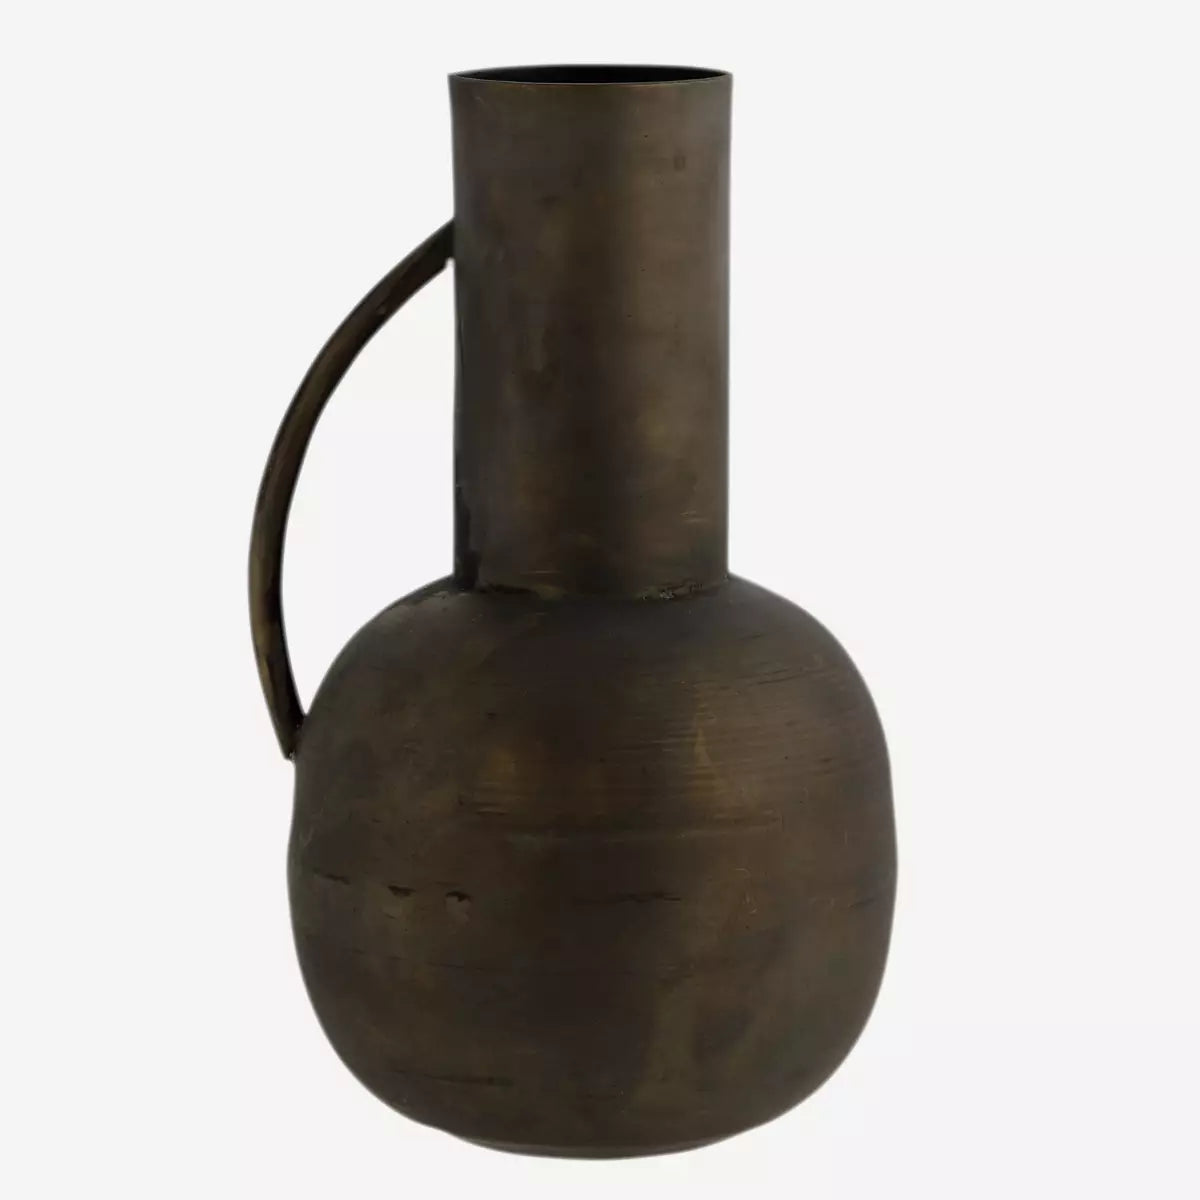 Iron vase with handle